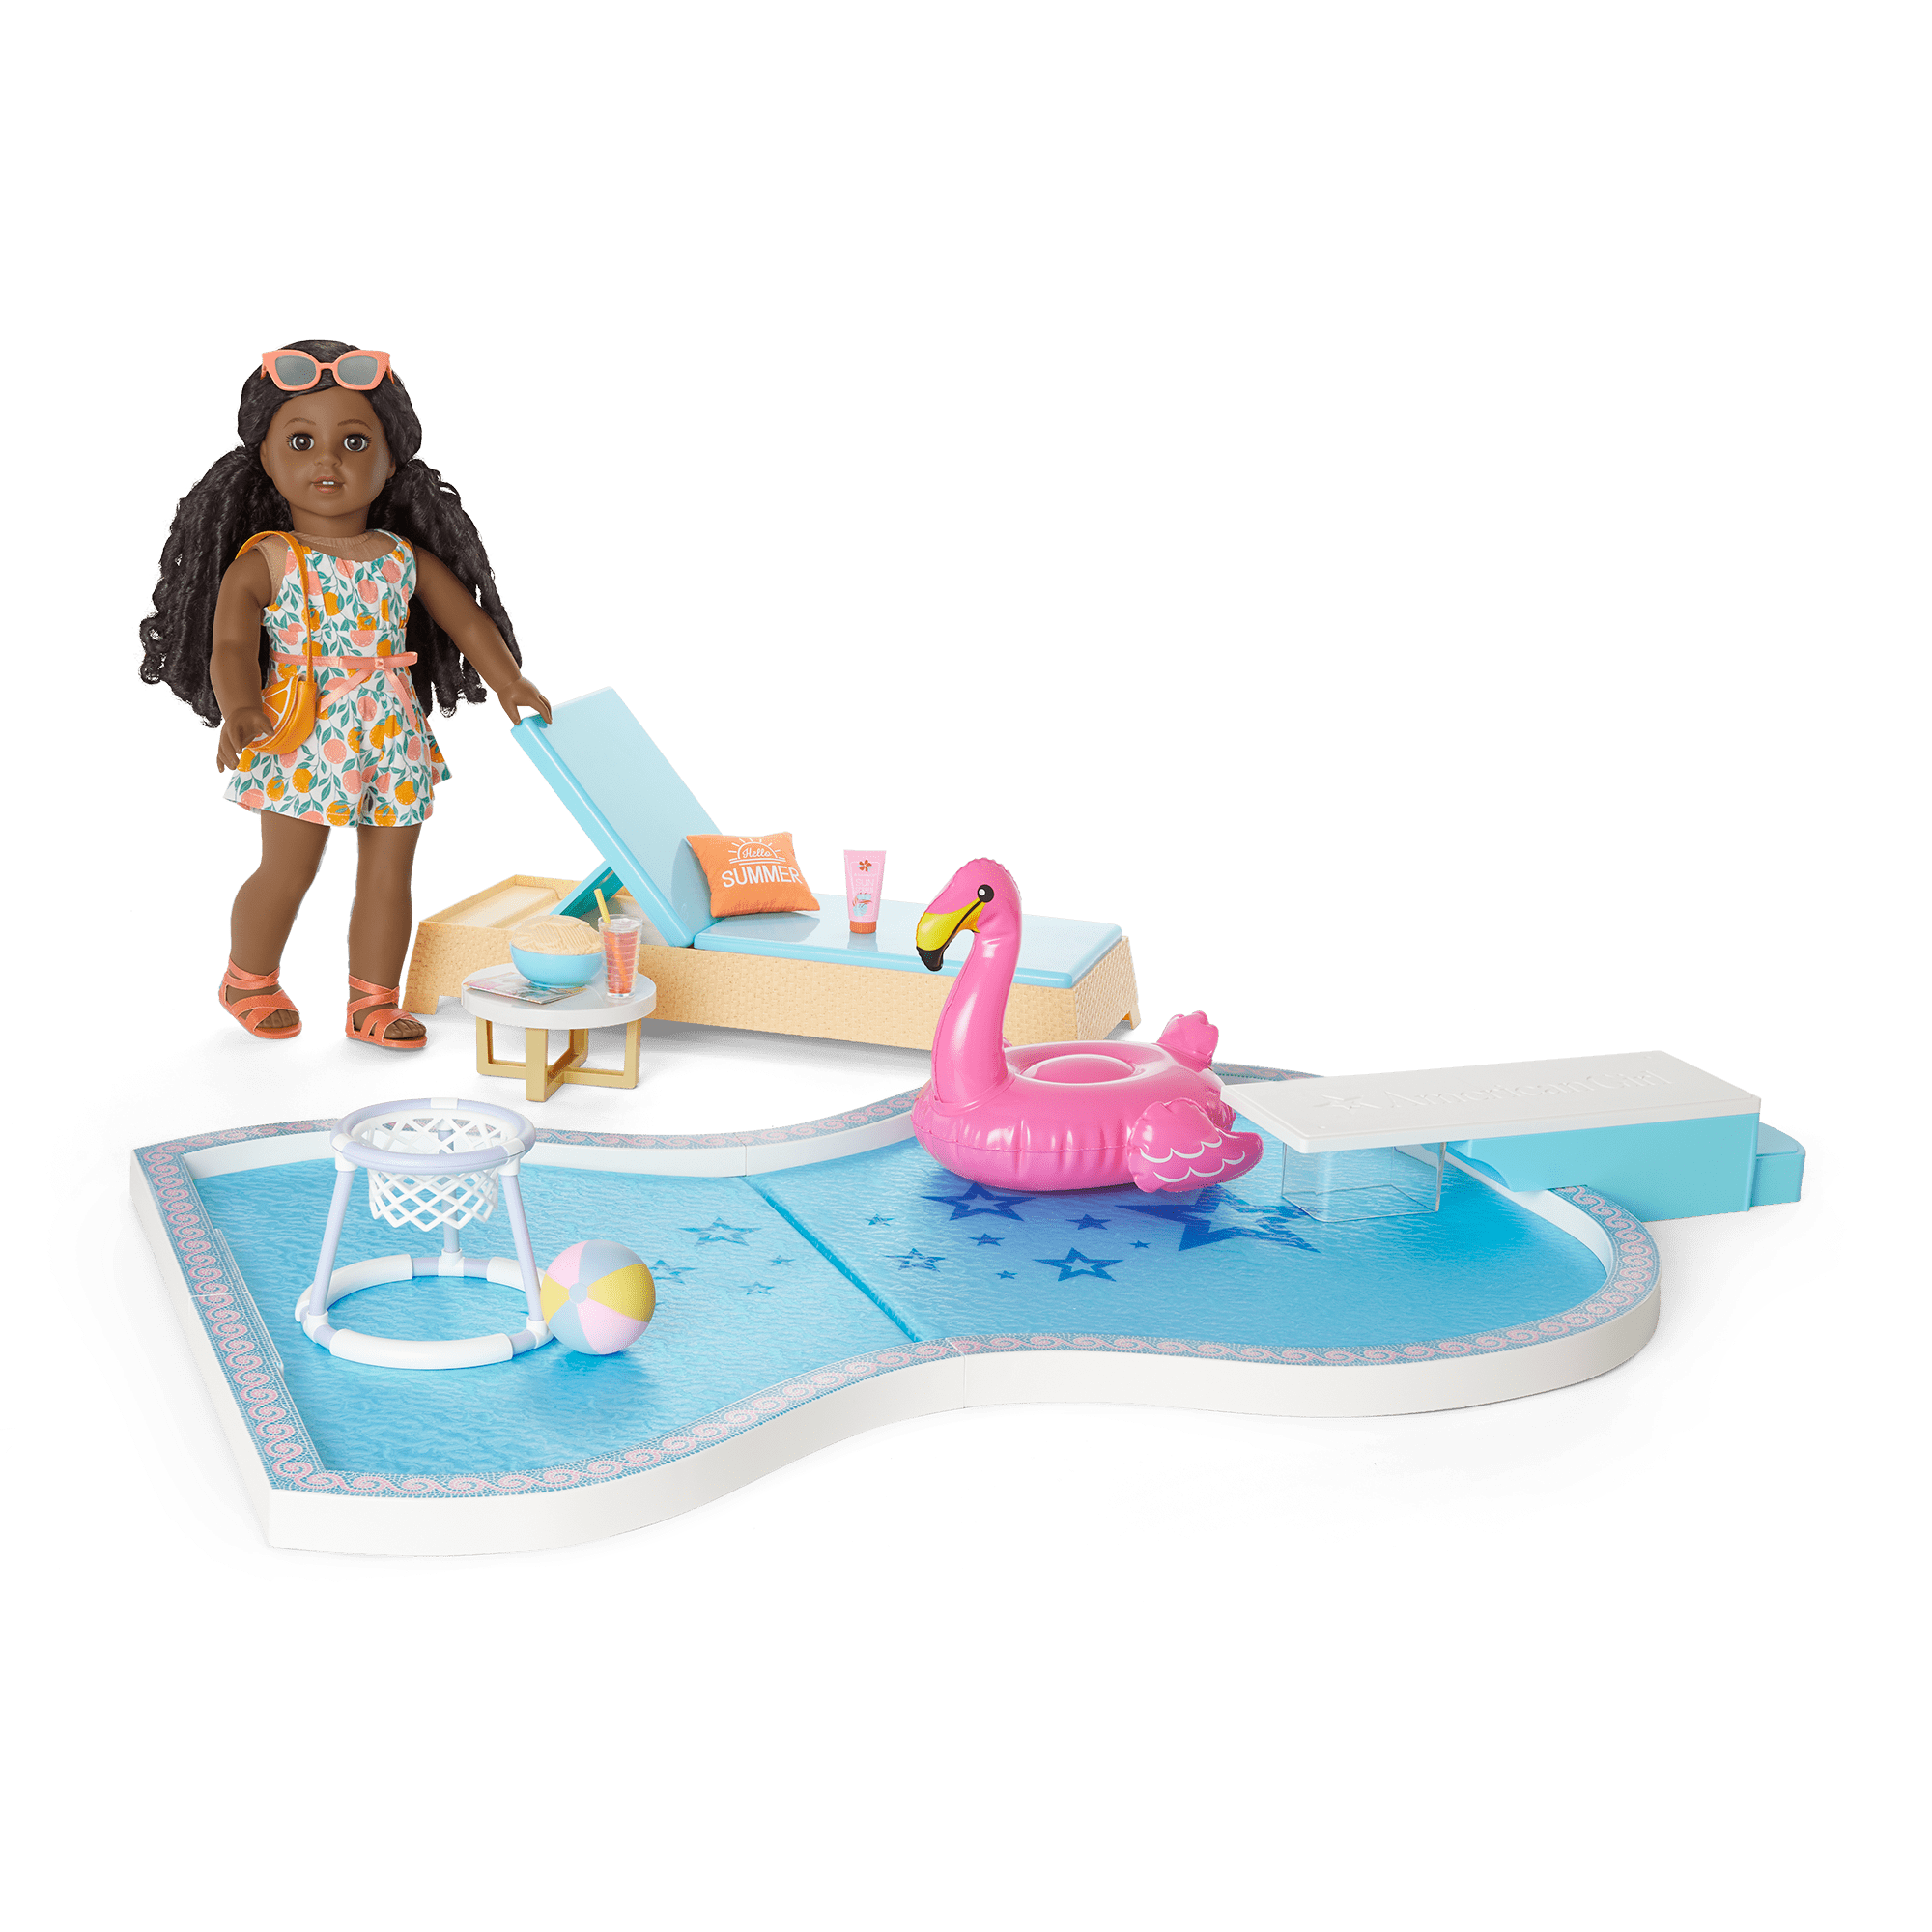 American Girl® x KidKraft® Dollhouse & Pool Bundle